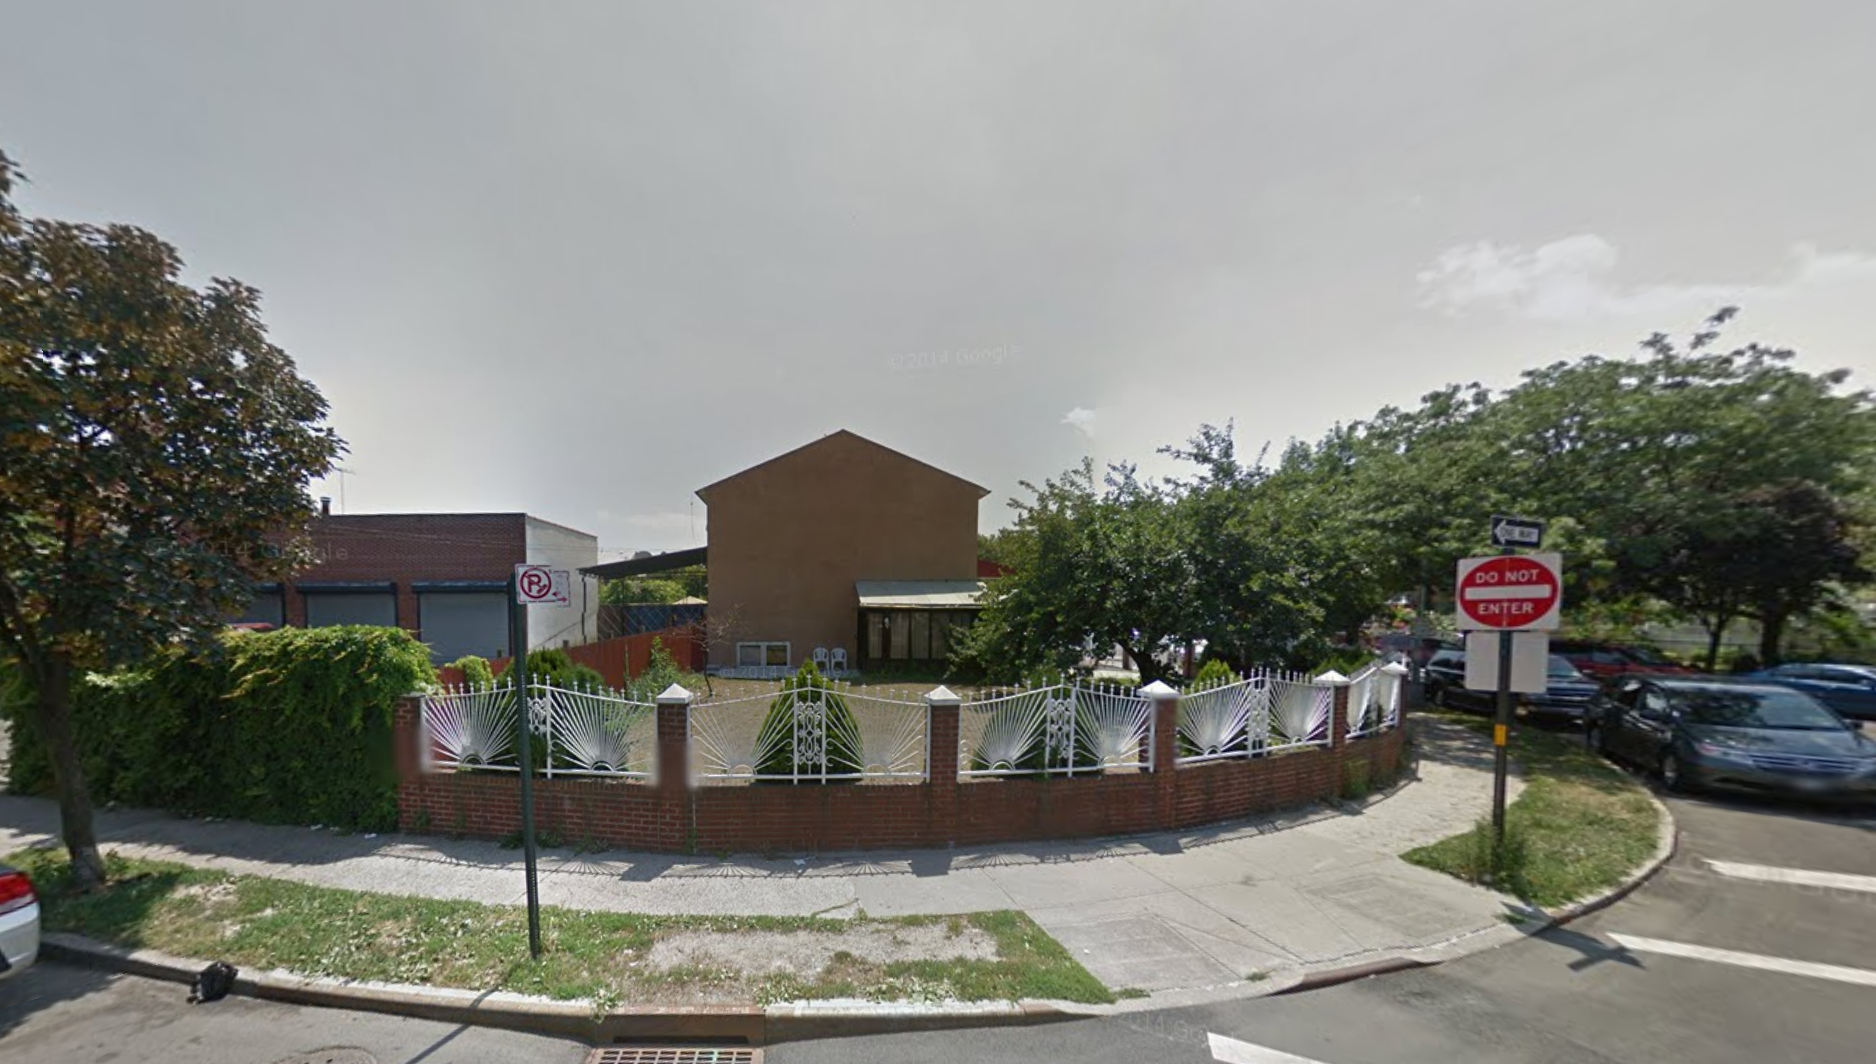 2180 Arthur Avenue, image via Google Maps